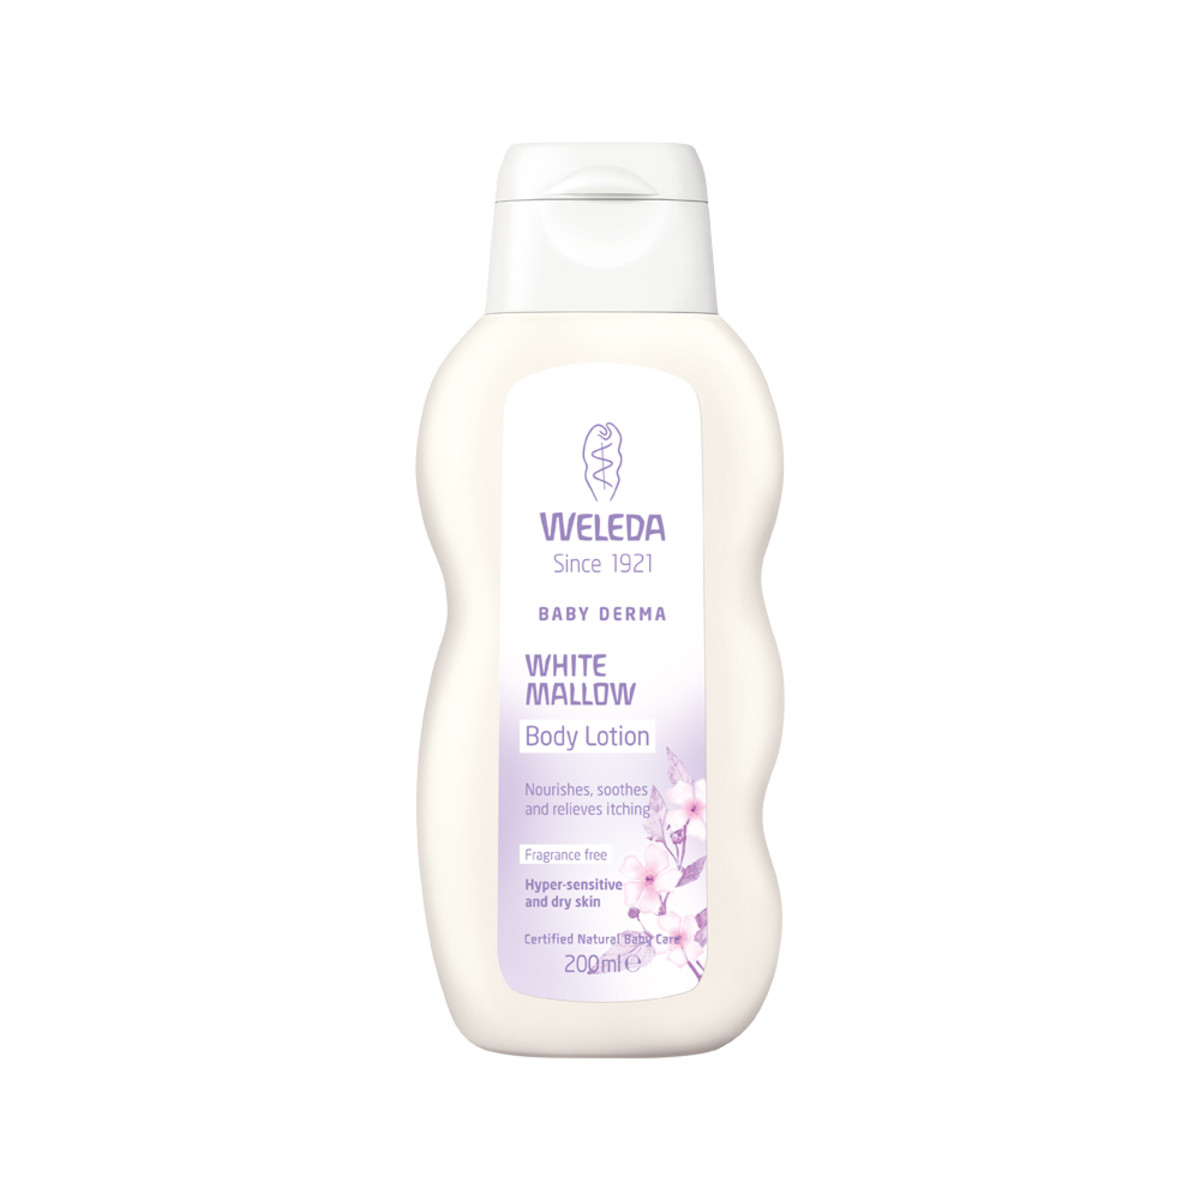 WELEDA - Baby Derma Body Lotion White Mallow (Hyper-Sensitive & Dry Skin - Fragrance Free)